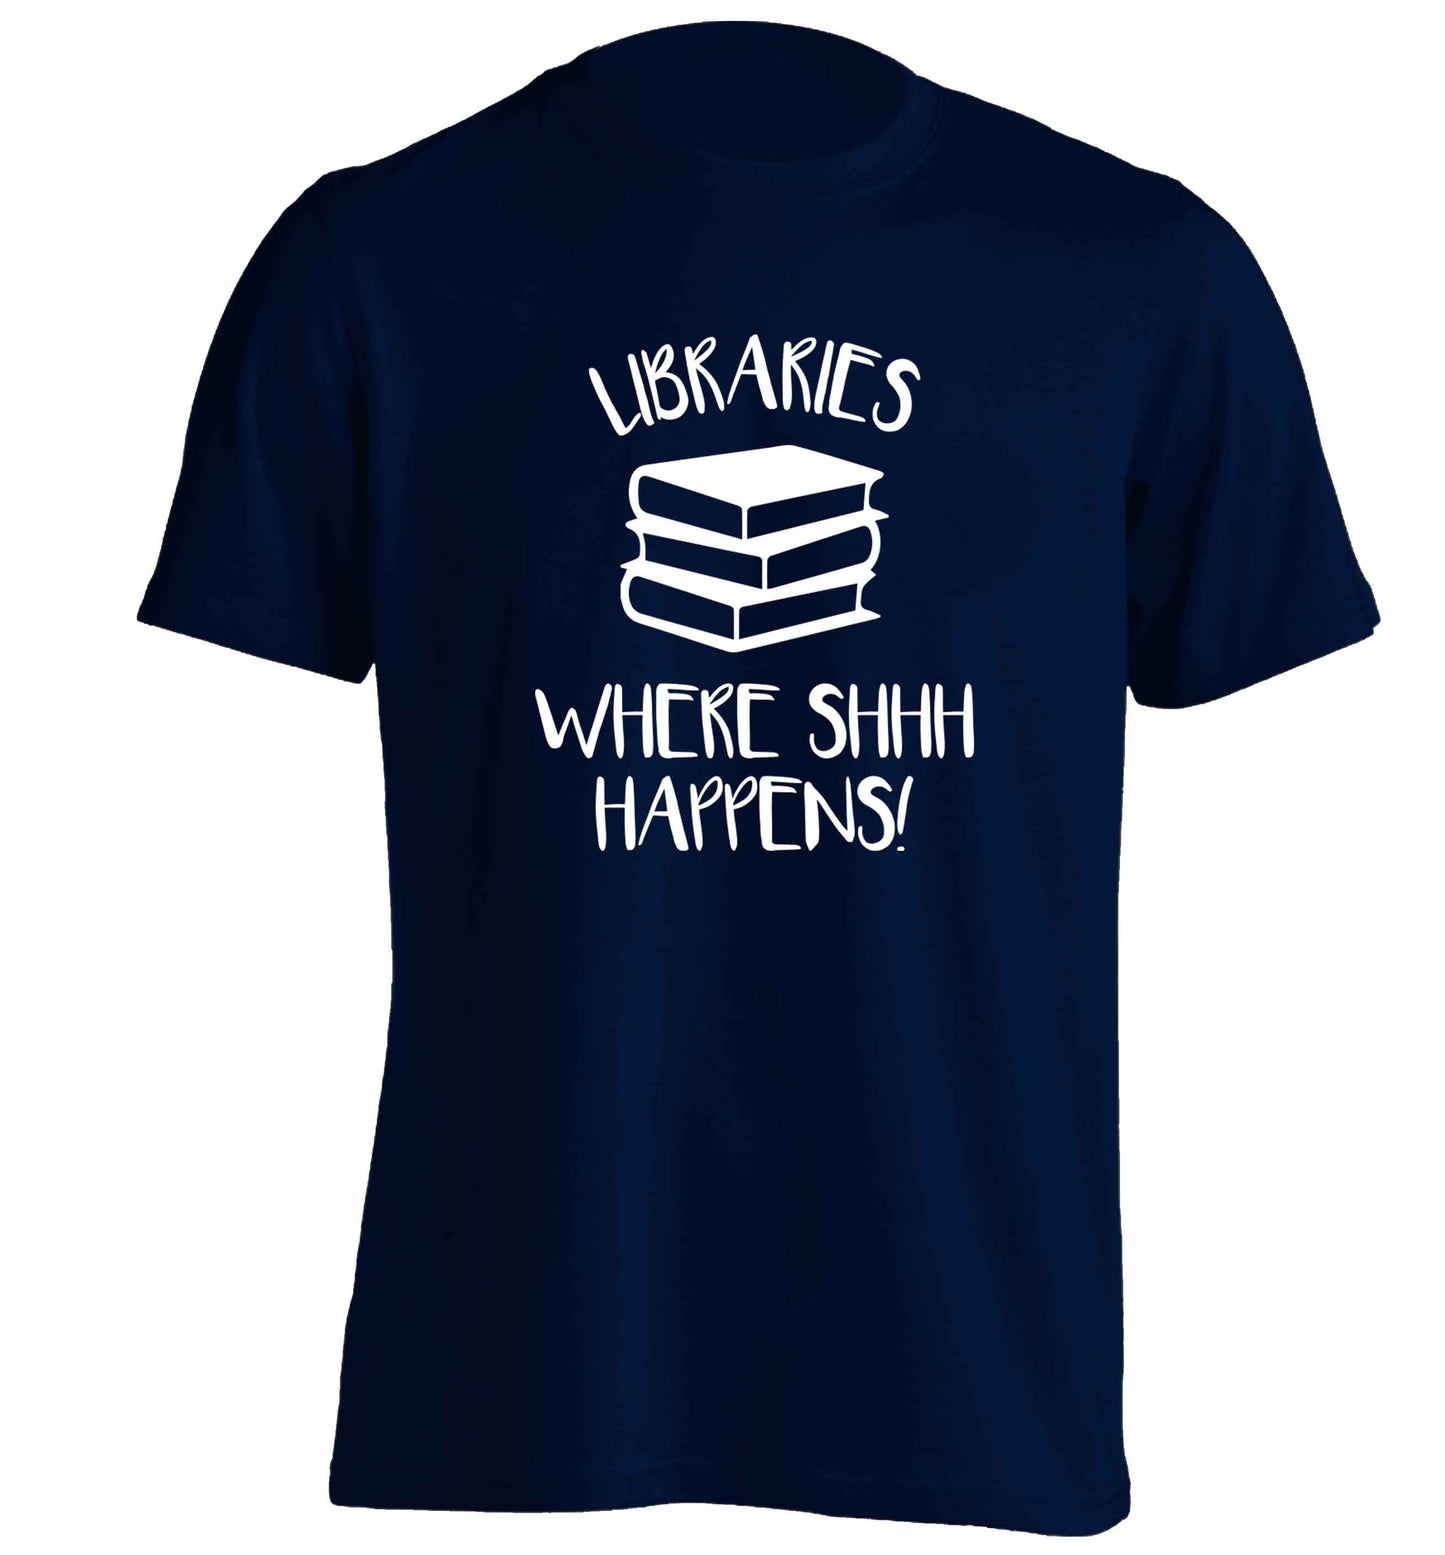 Libraries where shh happens! adults unisex navy Tshirt 2XL